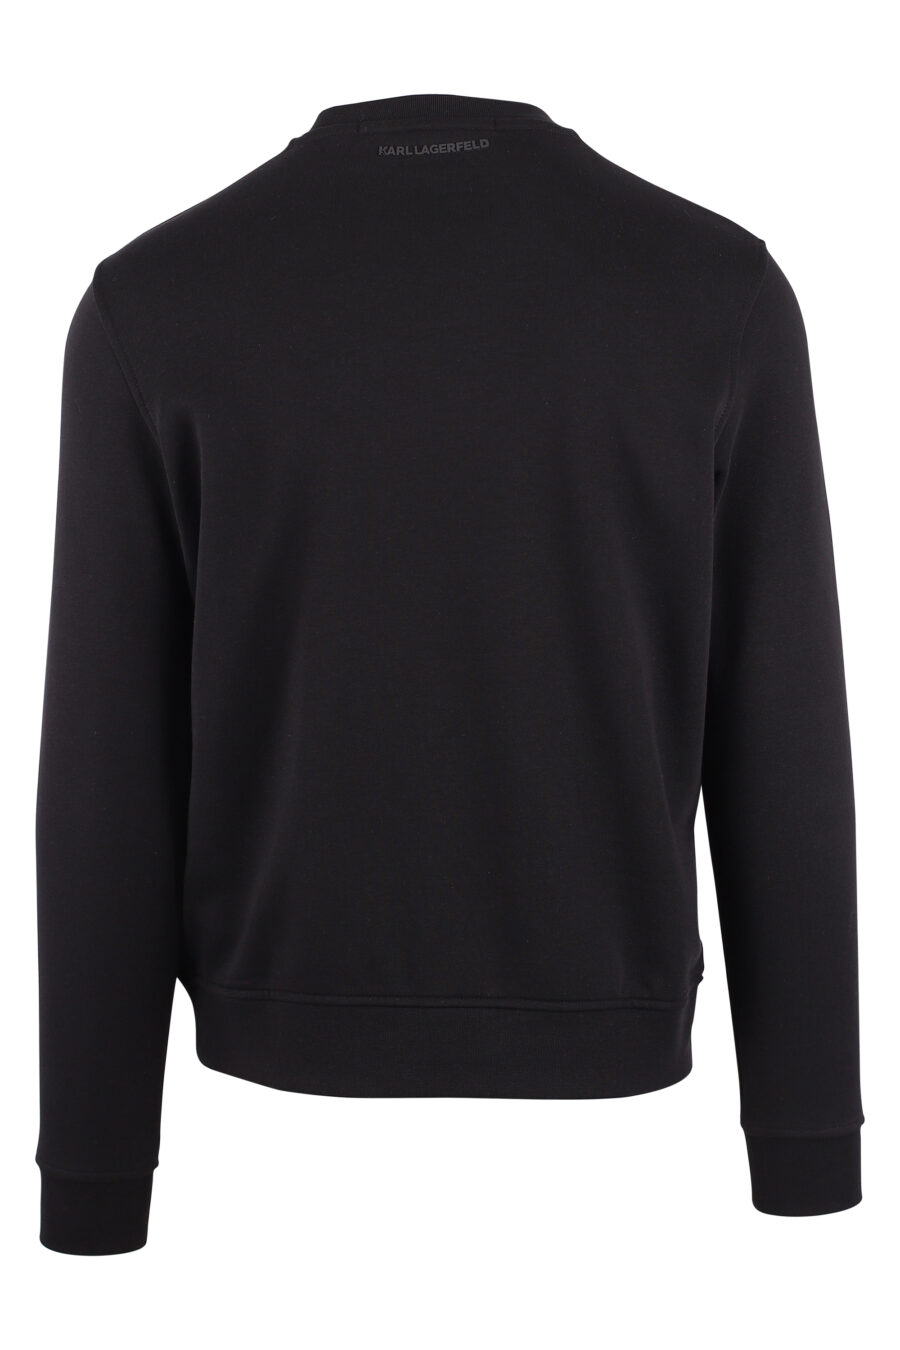 Black sweatshirt with "karl" maxilogo in orange silhouette - IMG 9440 1